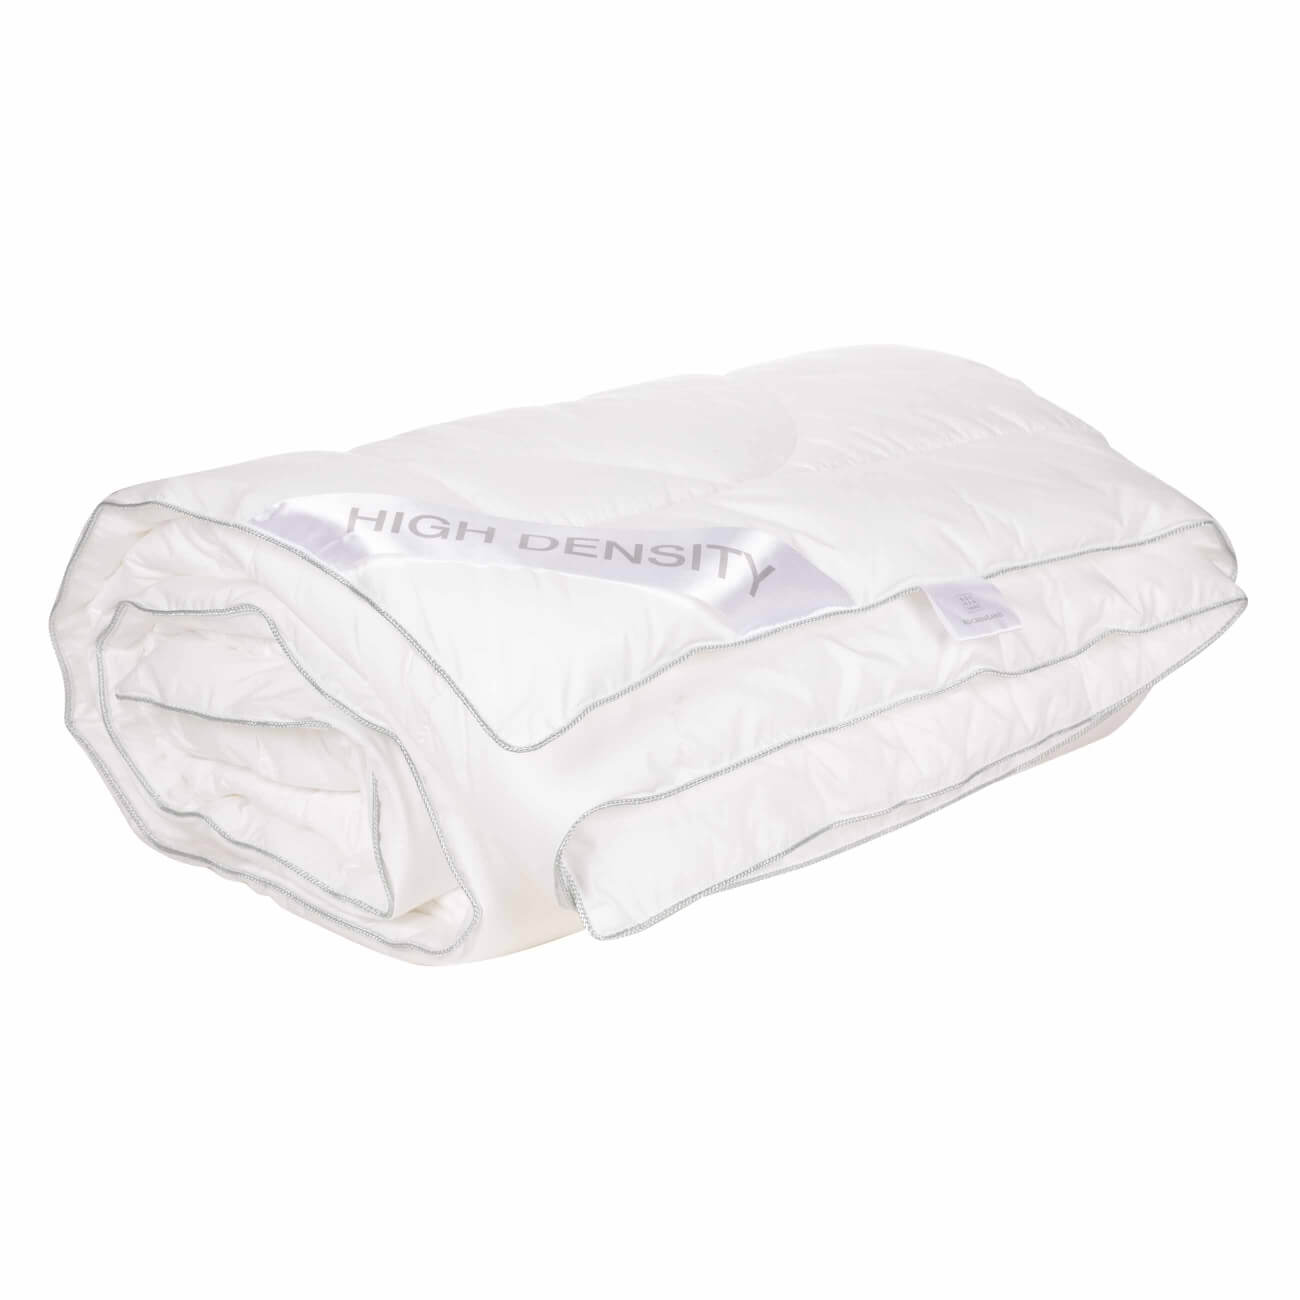 Одеяло, 200х220 см, полиэстер/микрофибра, High density одеяло 200х220 см микрофибра дакрон молочное cloud fiber